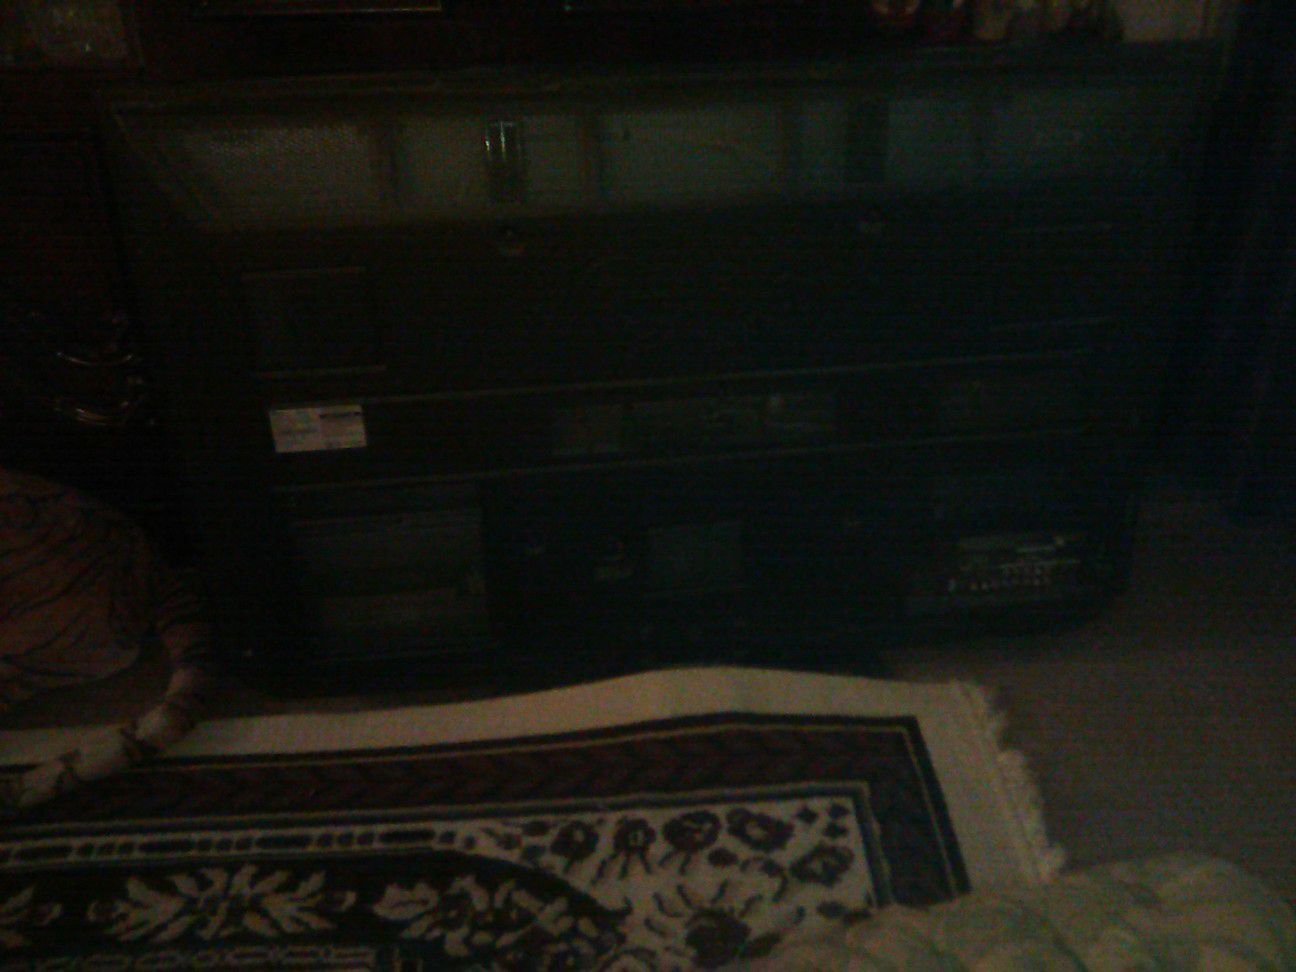 LG 50 inch plasma flat screen tv